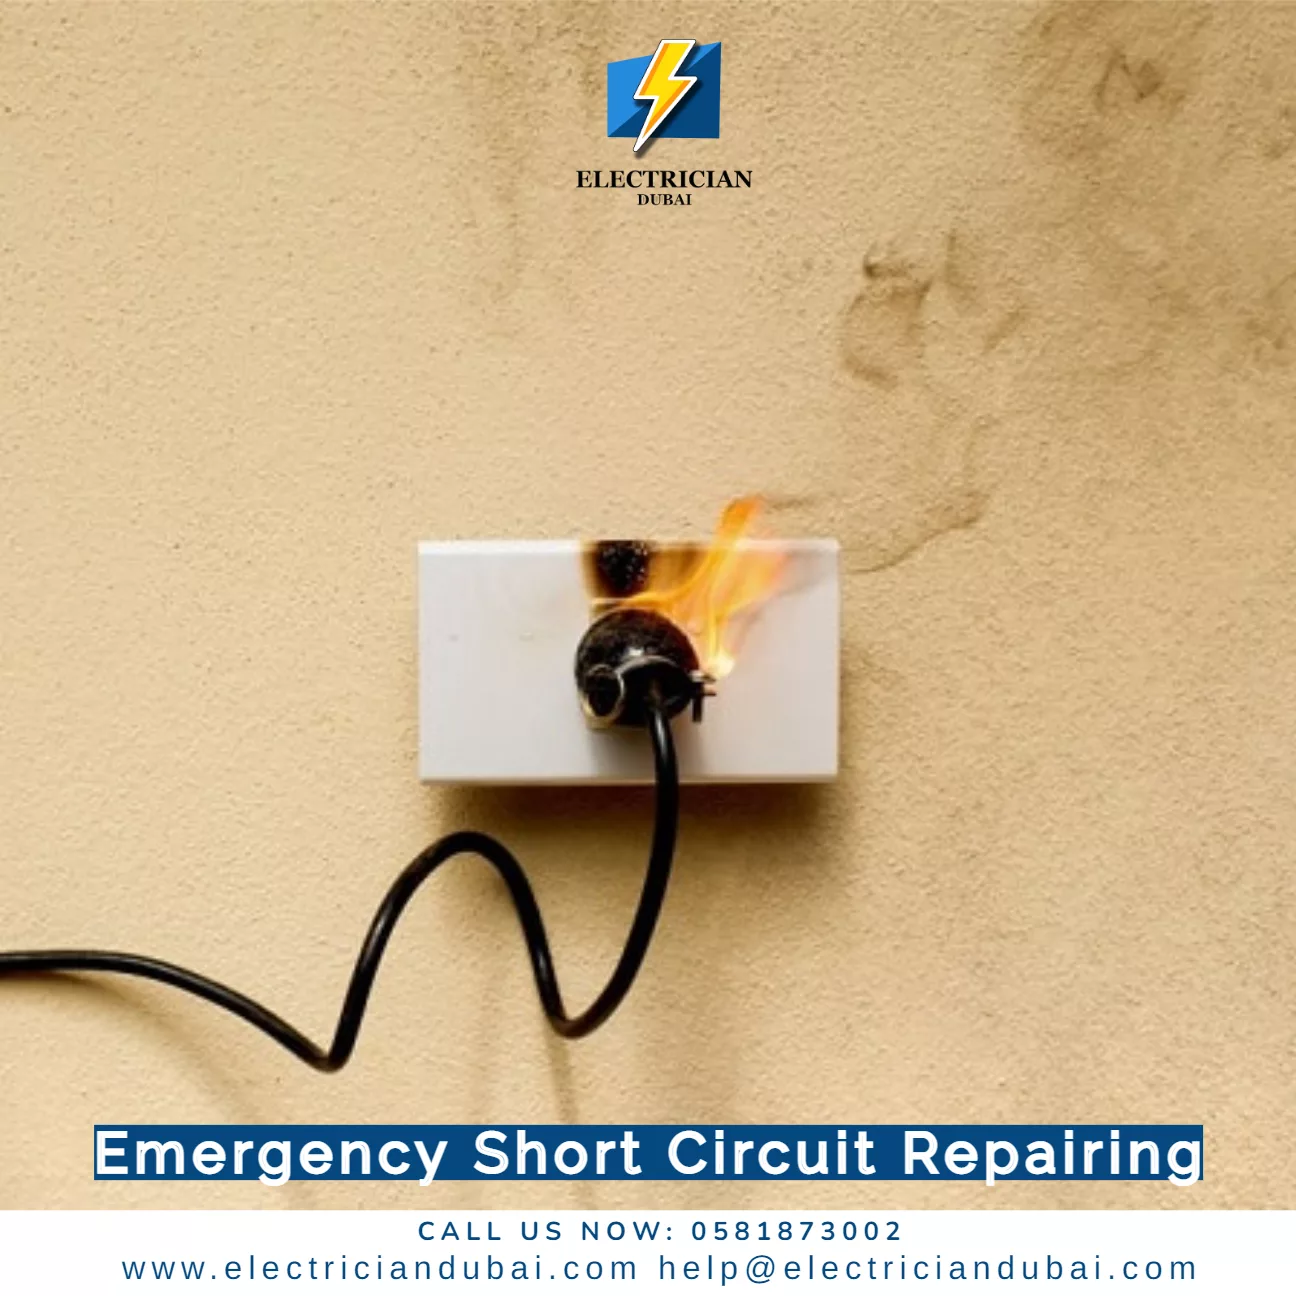 Emergency Short Circuit Repairing Service